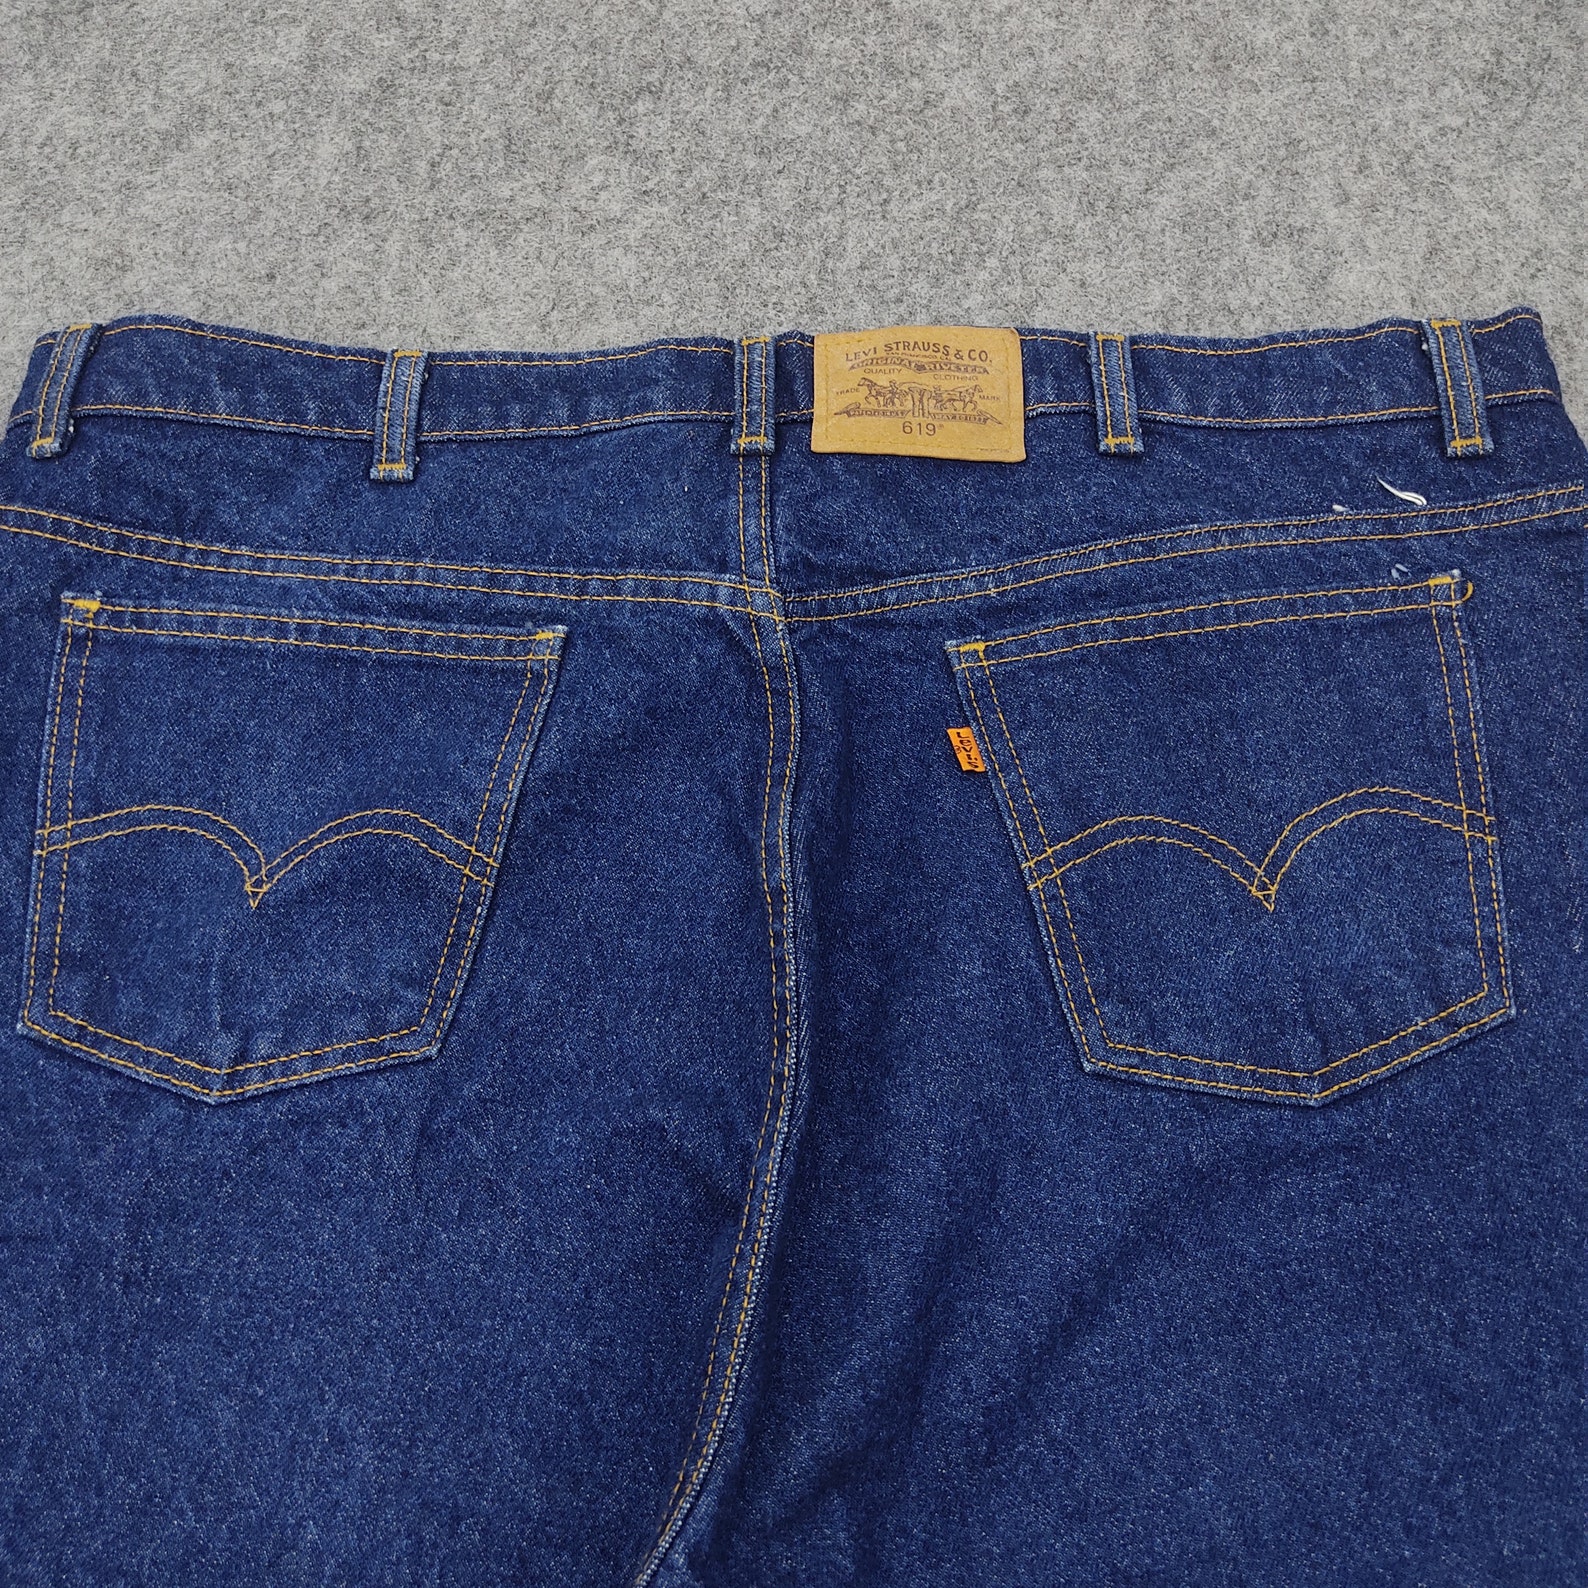 44 X 28 Vintage 80s Levis 501 Jeans Light Wash Distress Faded - Etsy UK